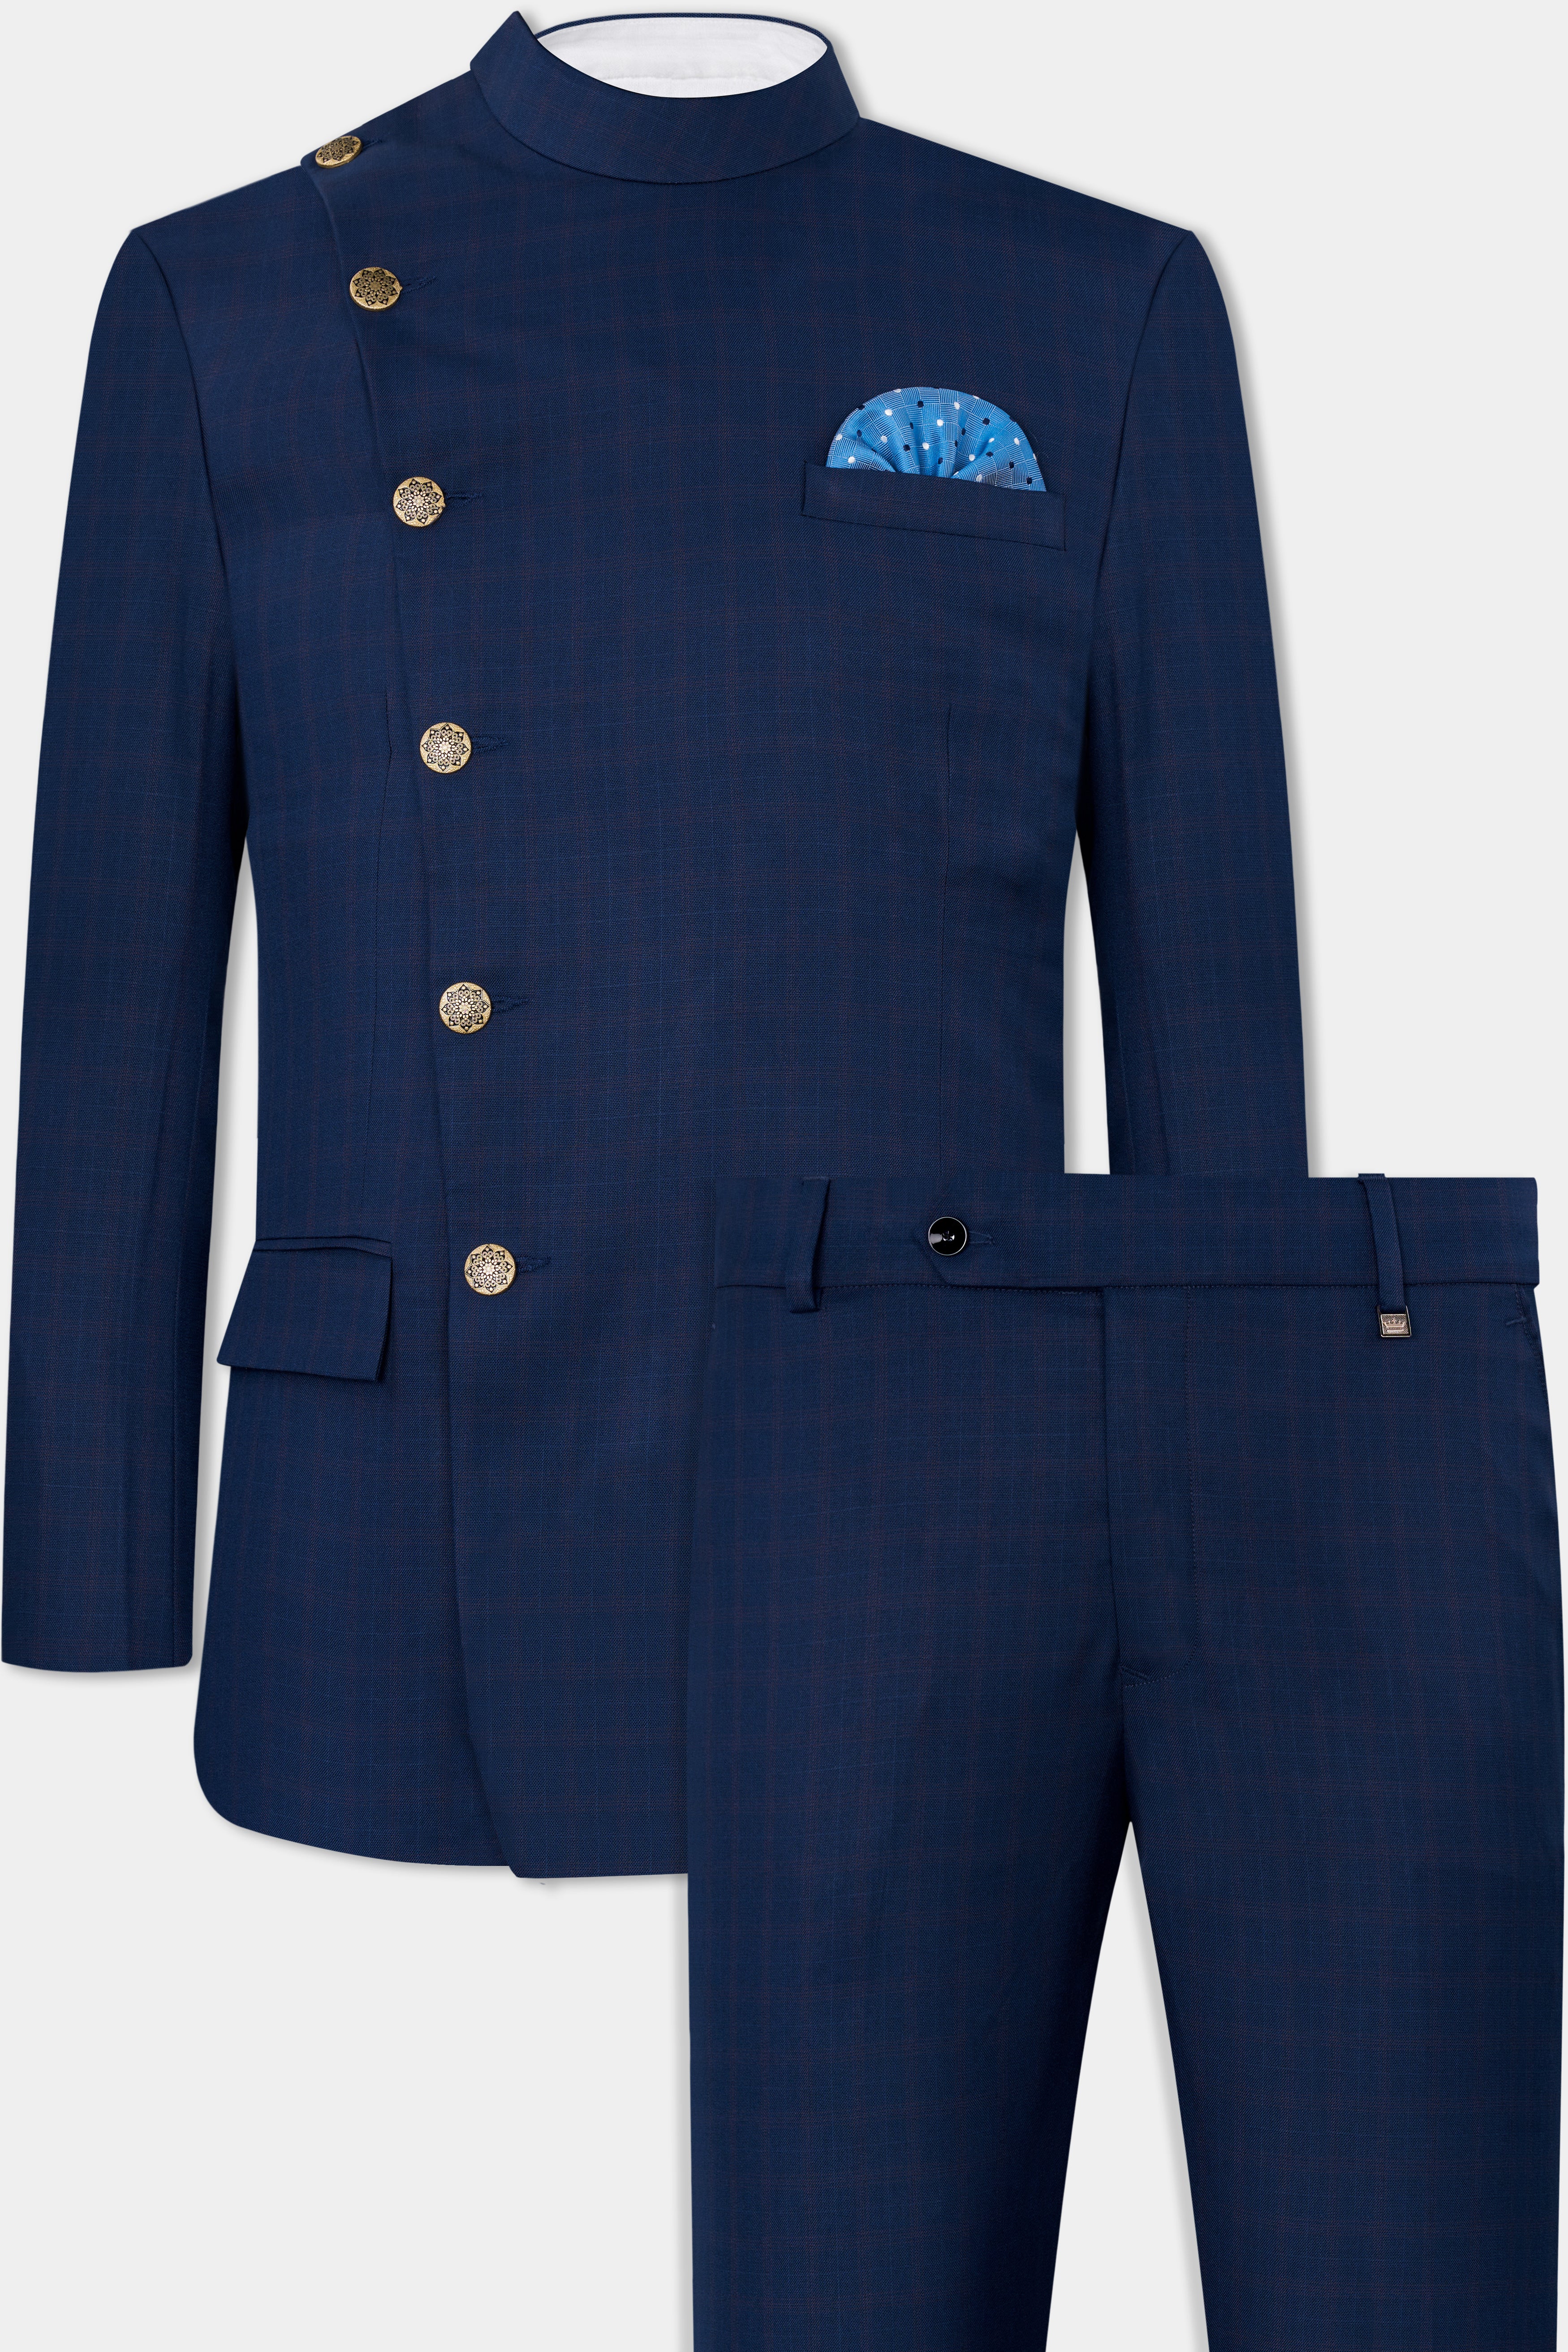 Nile Blue Wool Rich Cross Buttoned Bandhgala Suit ST2806-CBG2-36, ST2806-CBG2-38, ST2806-CBG2-40, ST2806-CBG2-42, ST2806-CBG2-44, ST2806-CBG2-46, ST2806-CBG2-48, ST2806-CBG2-50, ST2806-CBG2-52, ST2806-CBG2-54, ST2806-CBG2-56, ST2806-CBG2-58, ST2806-CBG2-60